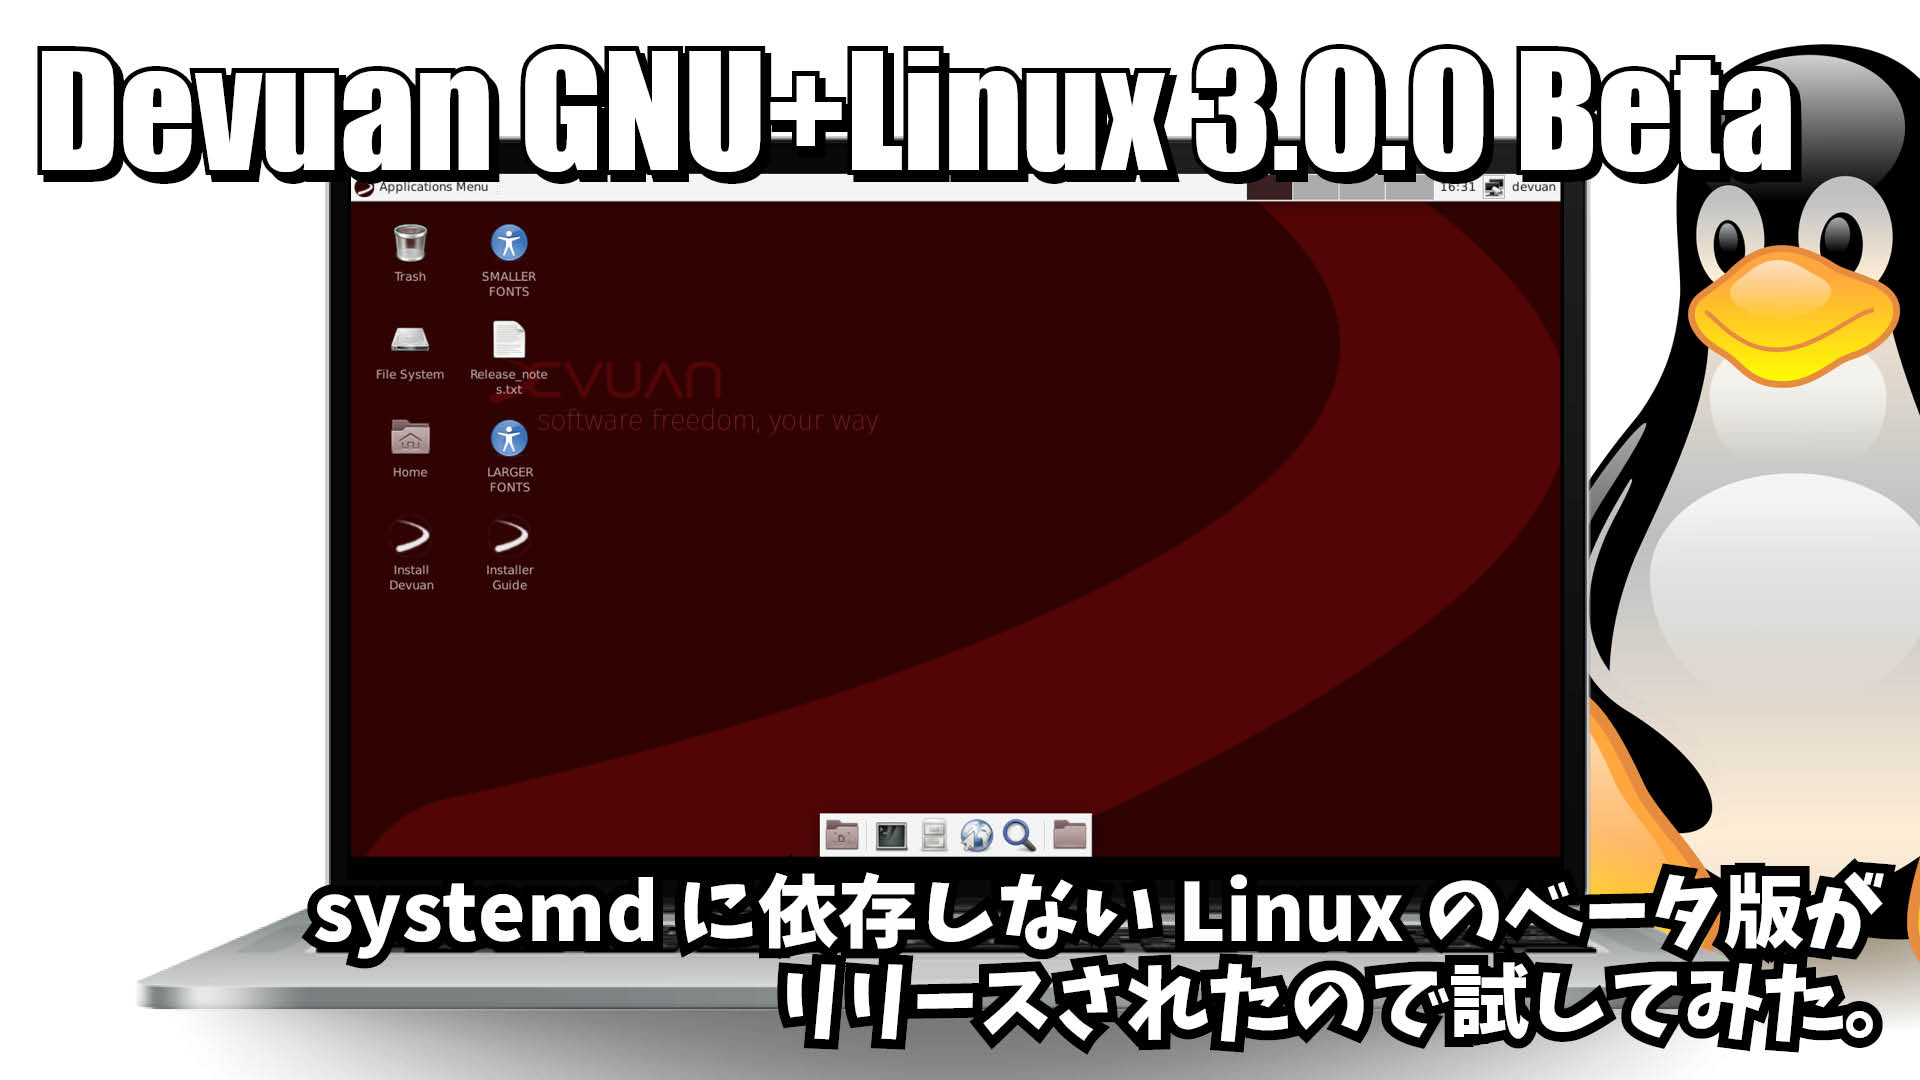 Devuan GNU+Linux 3.0.0 Beta: systemdに依存しないLinuxのベータ版がリリースされたので試してみた。